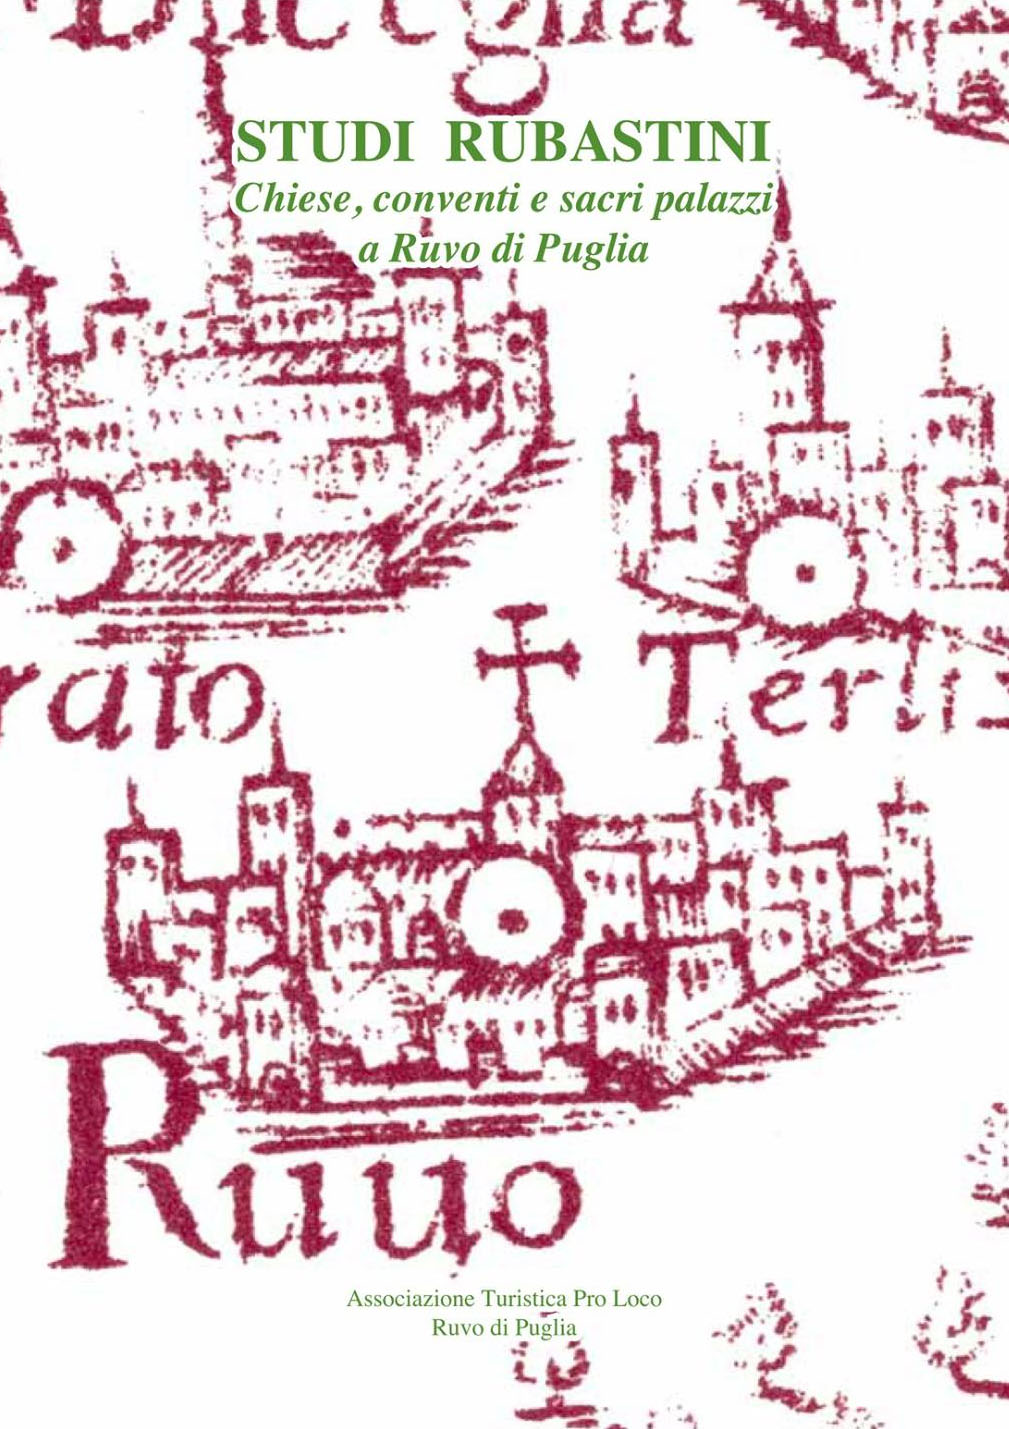 Presentazione di “Studi Rubastini: Chiese, conventi e sacri palazzi a Ruvo di Puglia”